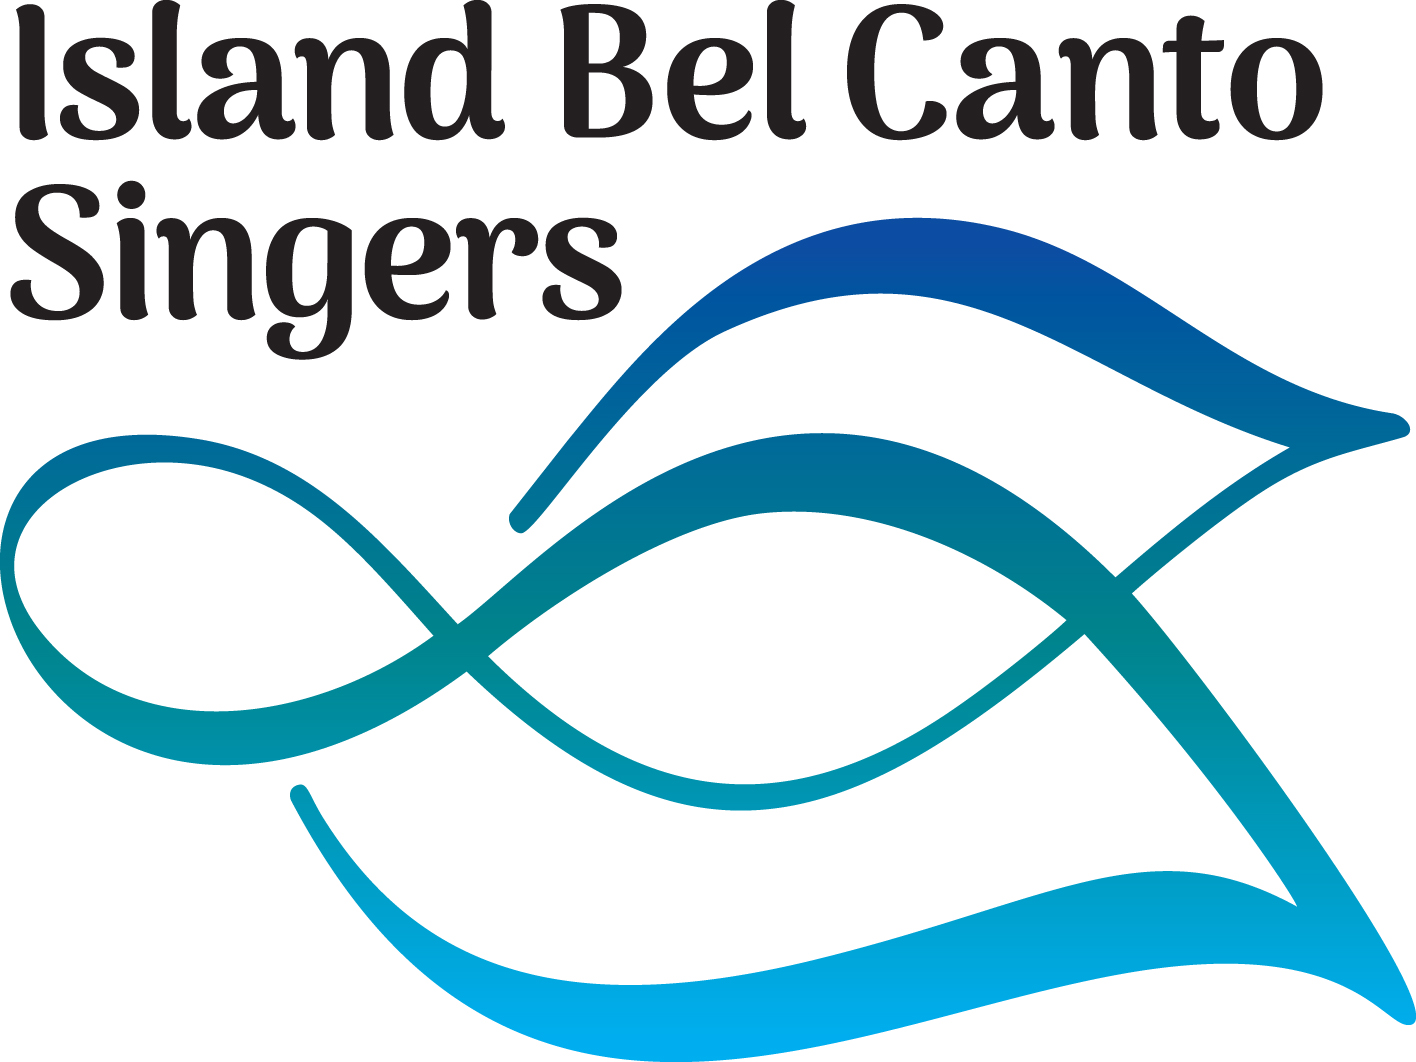 Island Bel Canto Singers